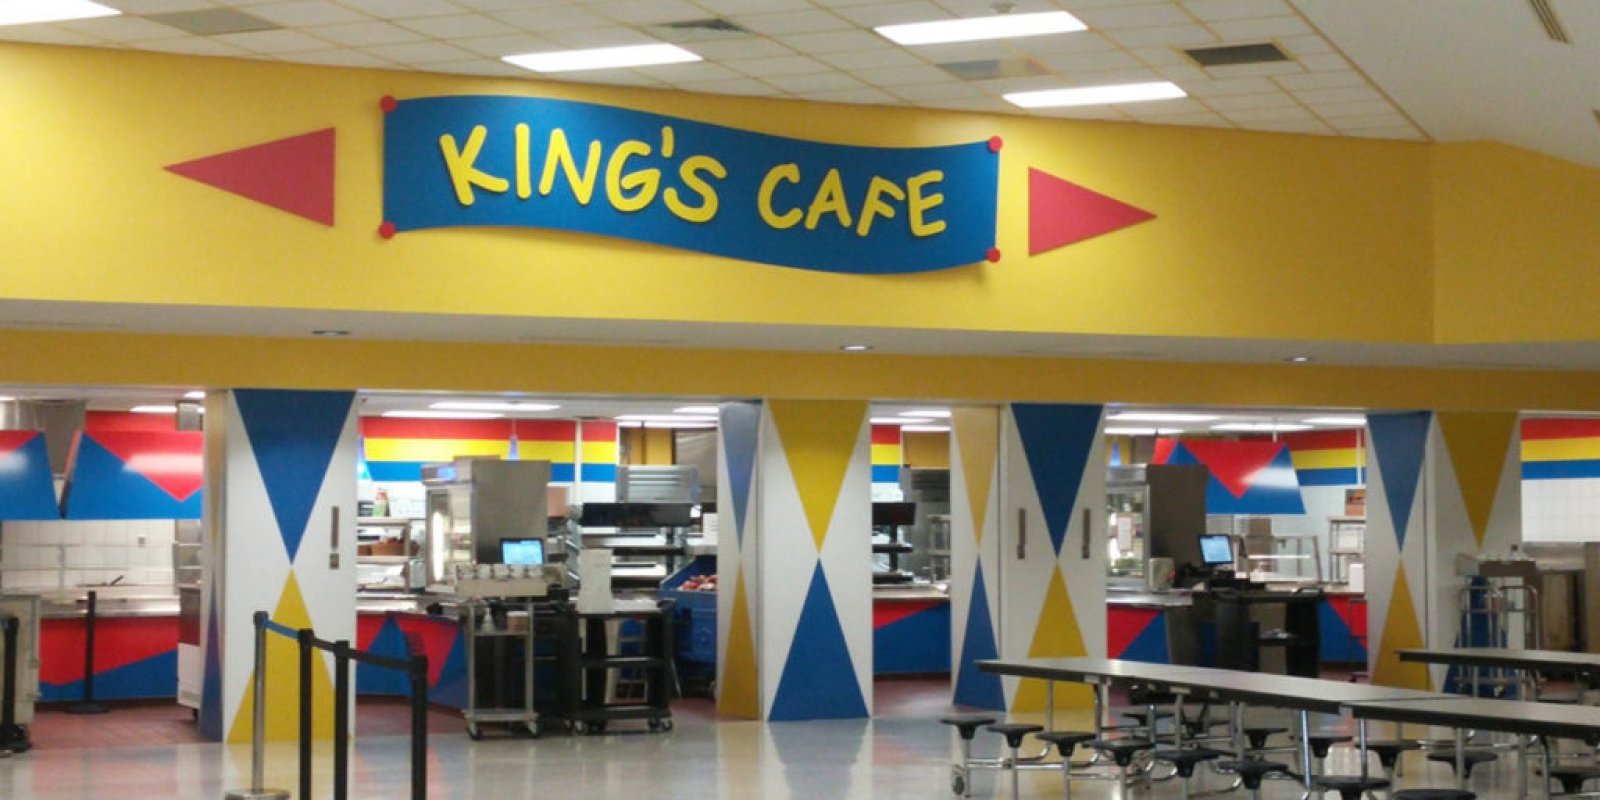 King’s Cafe